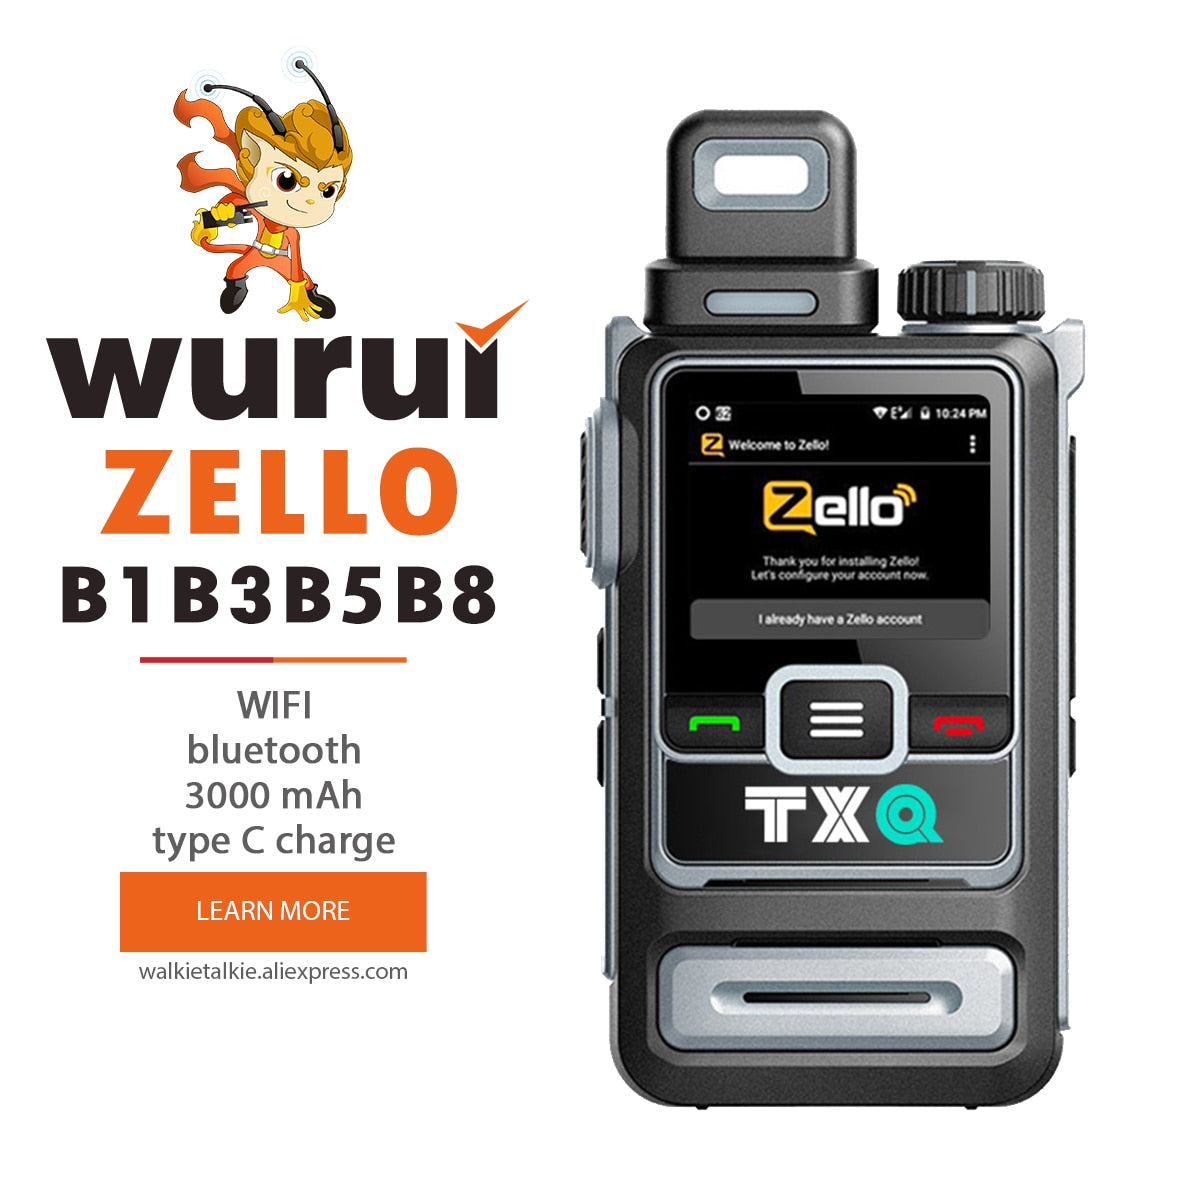 zello Global version WiFi Bluetooth TXQ 258 POC walkie talkie Android 5.1 Check SIM card 3G 4G B1B3 B5 not limited distance